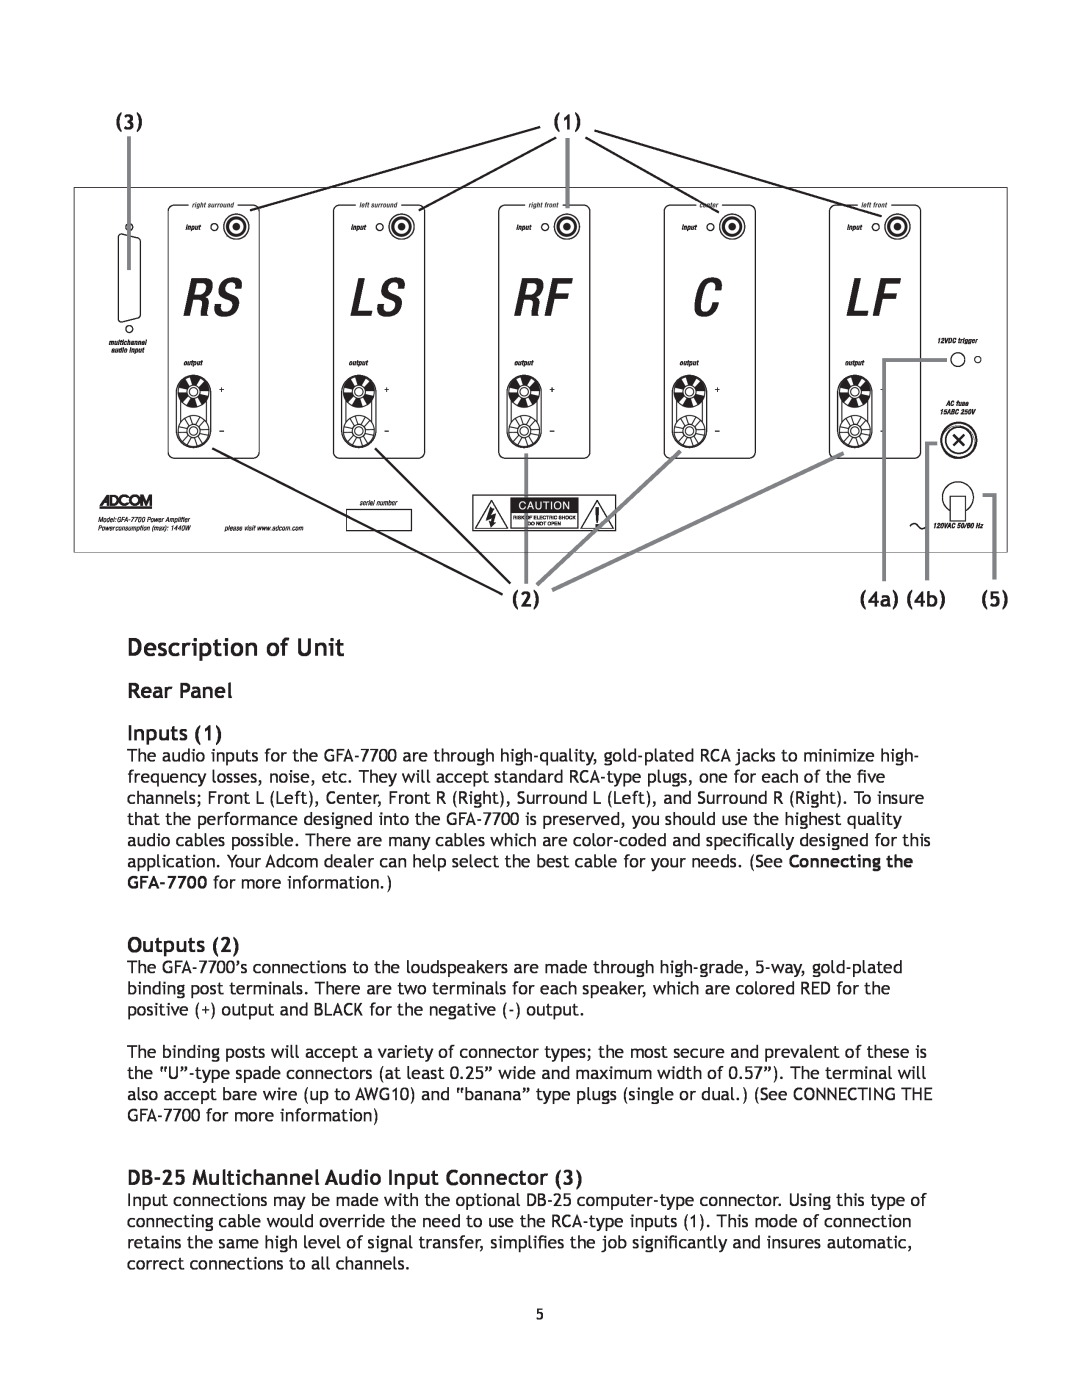 Adcom GFA-7700 owner manual Description of Unit, Rear Panel Inputs, Outputs, DB-25Multichannel Audio Input Connector 